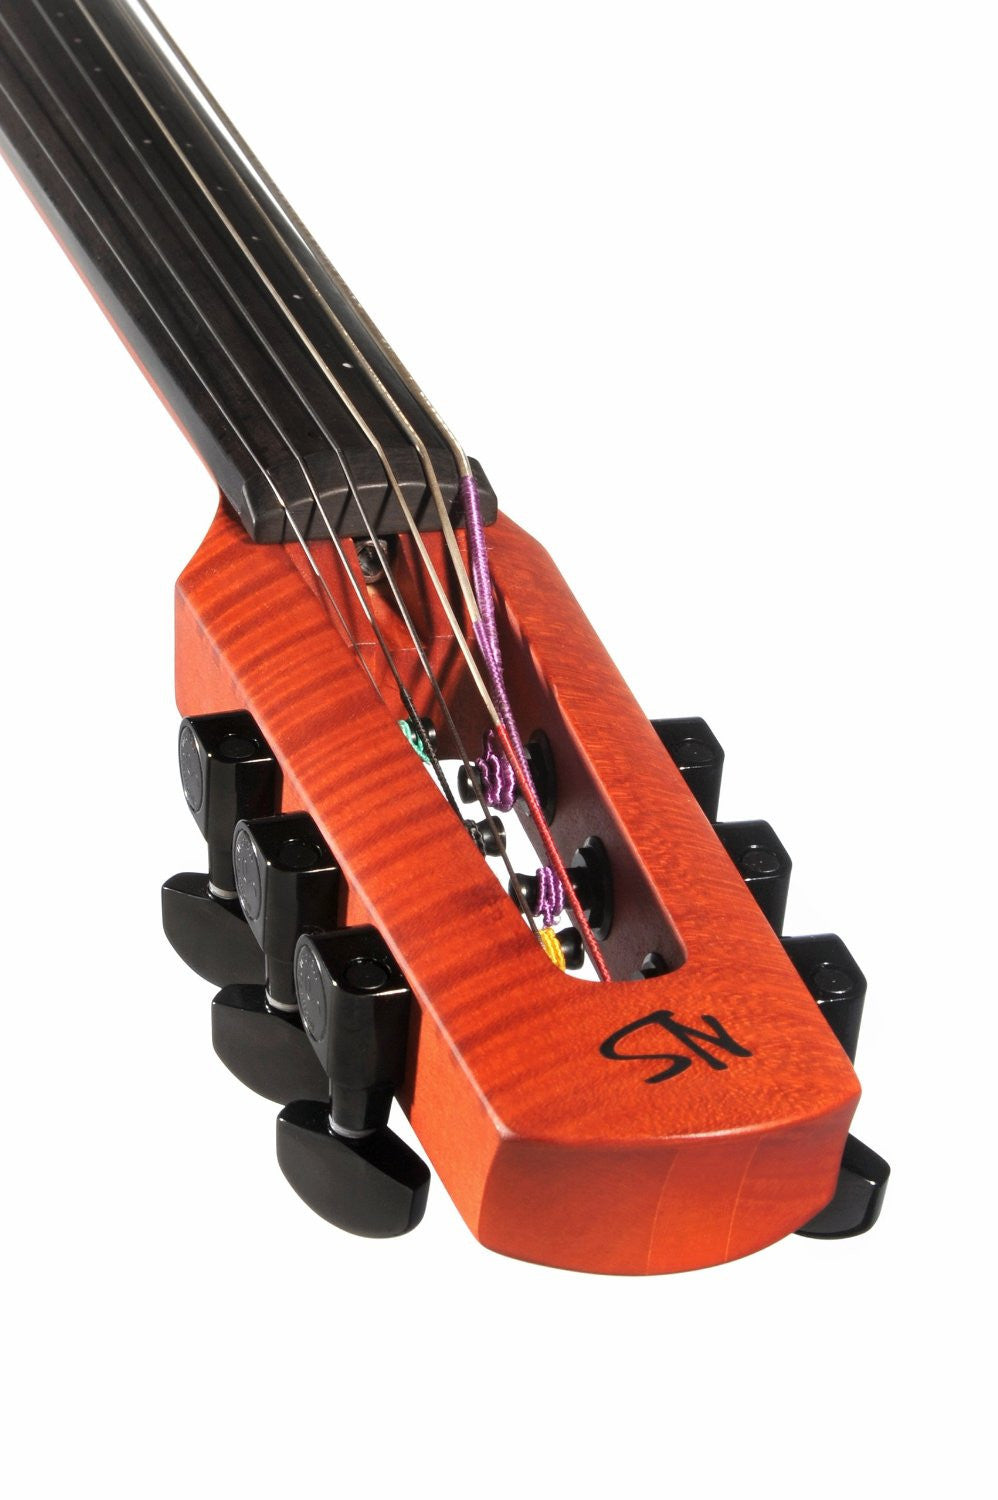 NS Design CS Series Electric Cello - Scroll